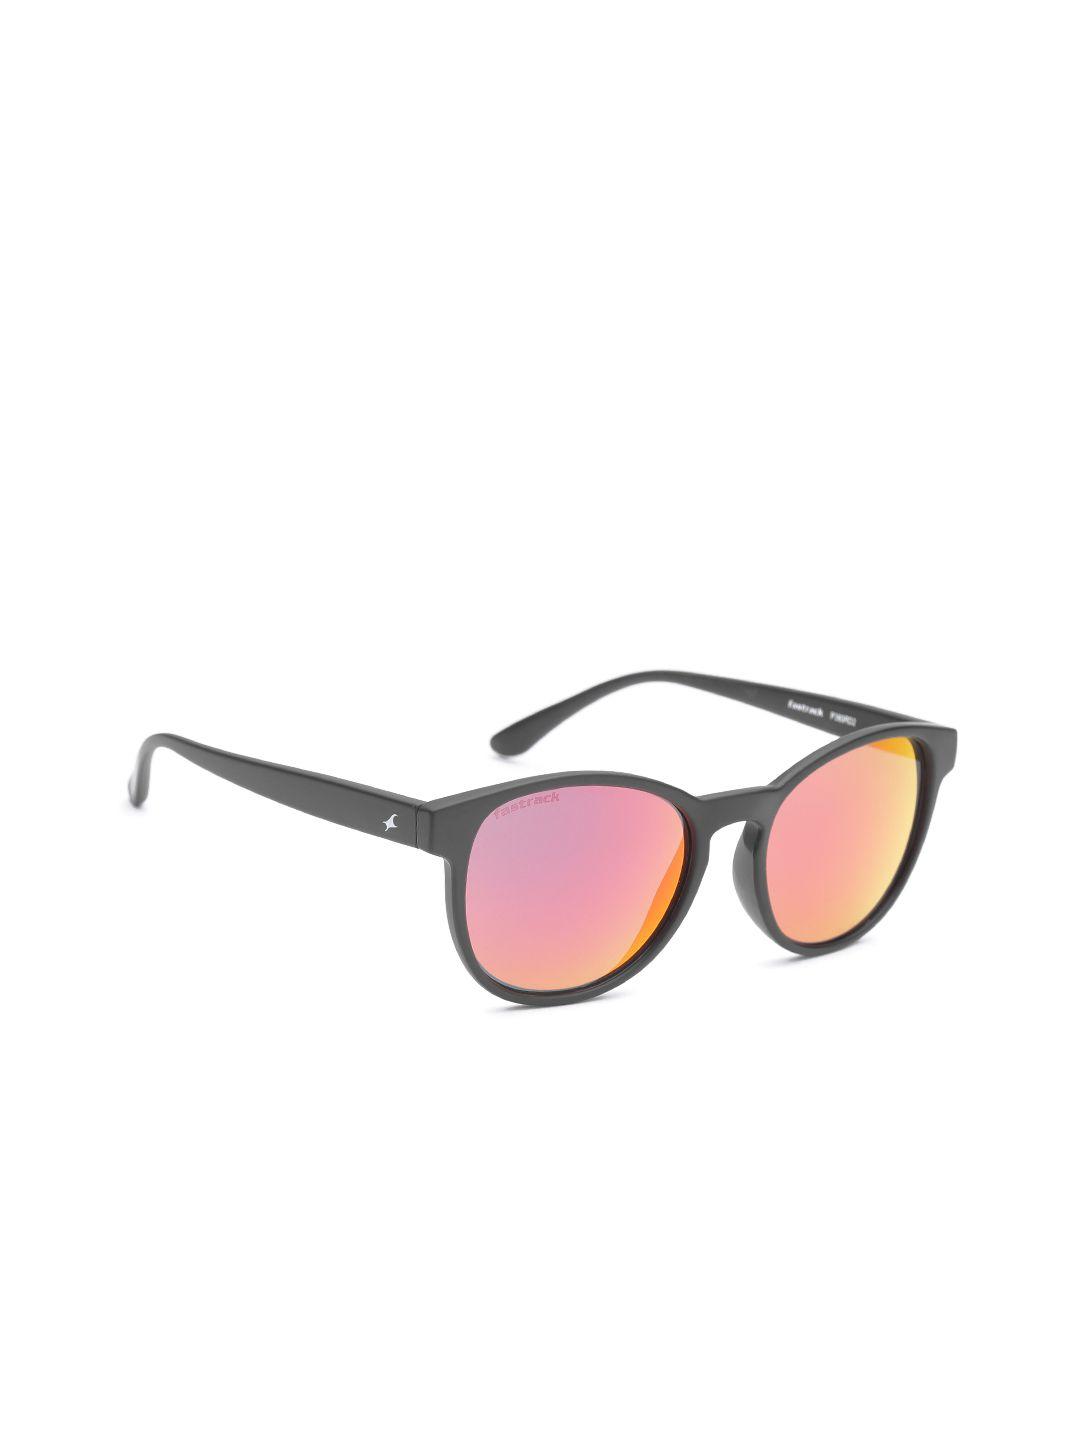 fastrack-men-oval-mirrored-sunglasses-nbp360rd2